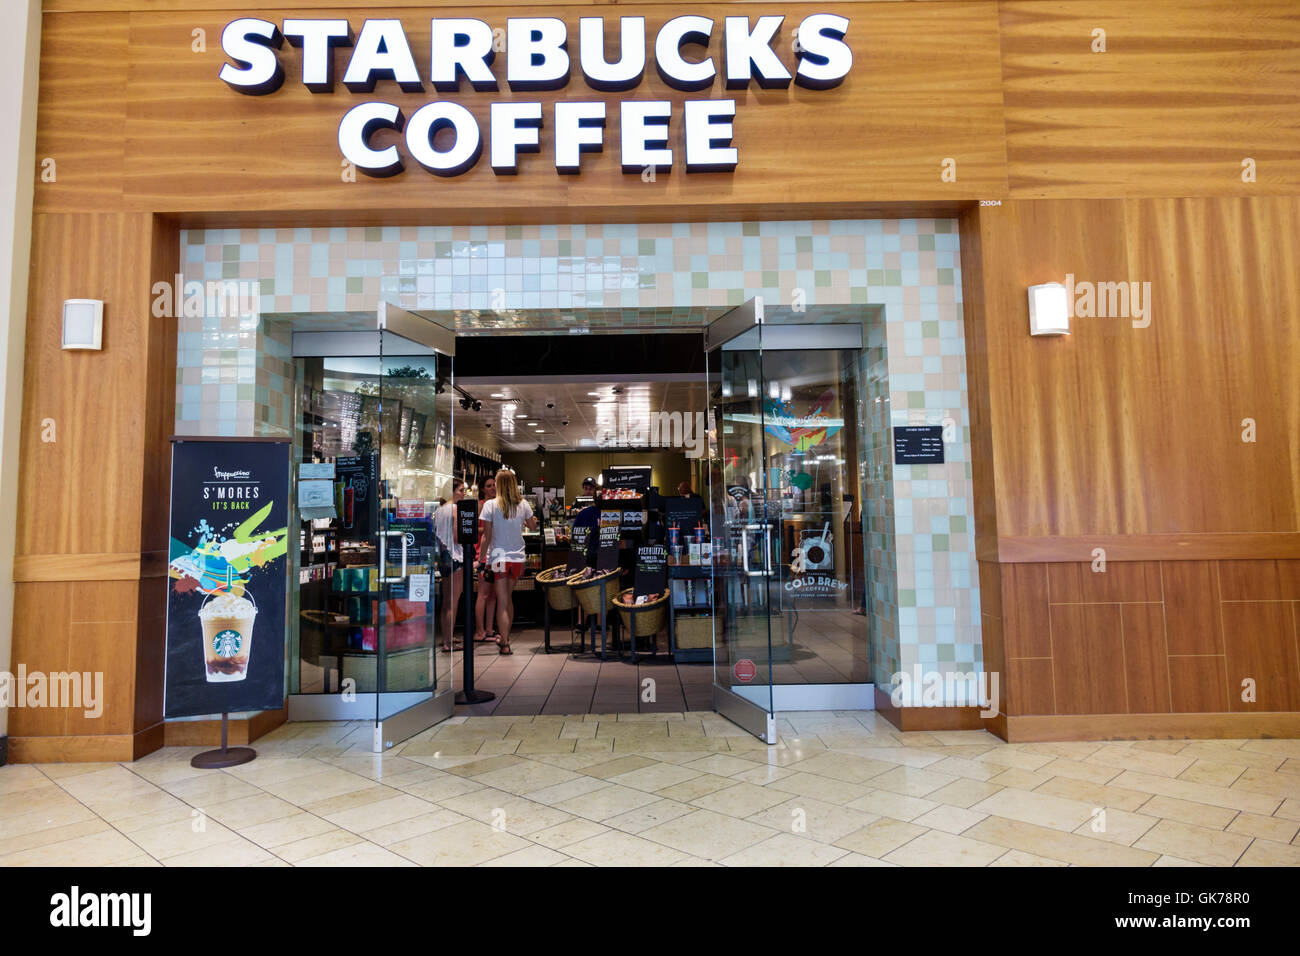 Naples Florida,Coastland Center Shopping Mall,shopping center,Starbucks Coffee,coffeehouse,chain,sign,entrance,front,FL160610059 Stock Photo